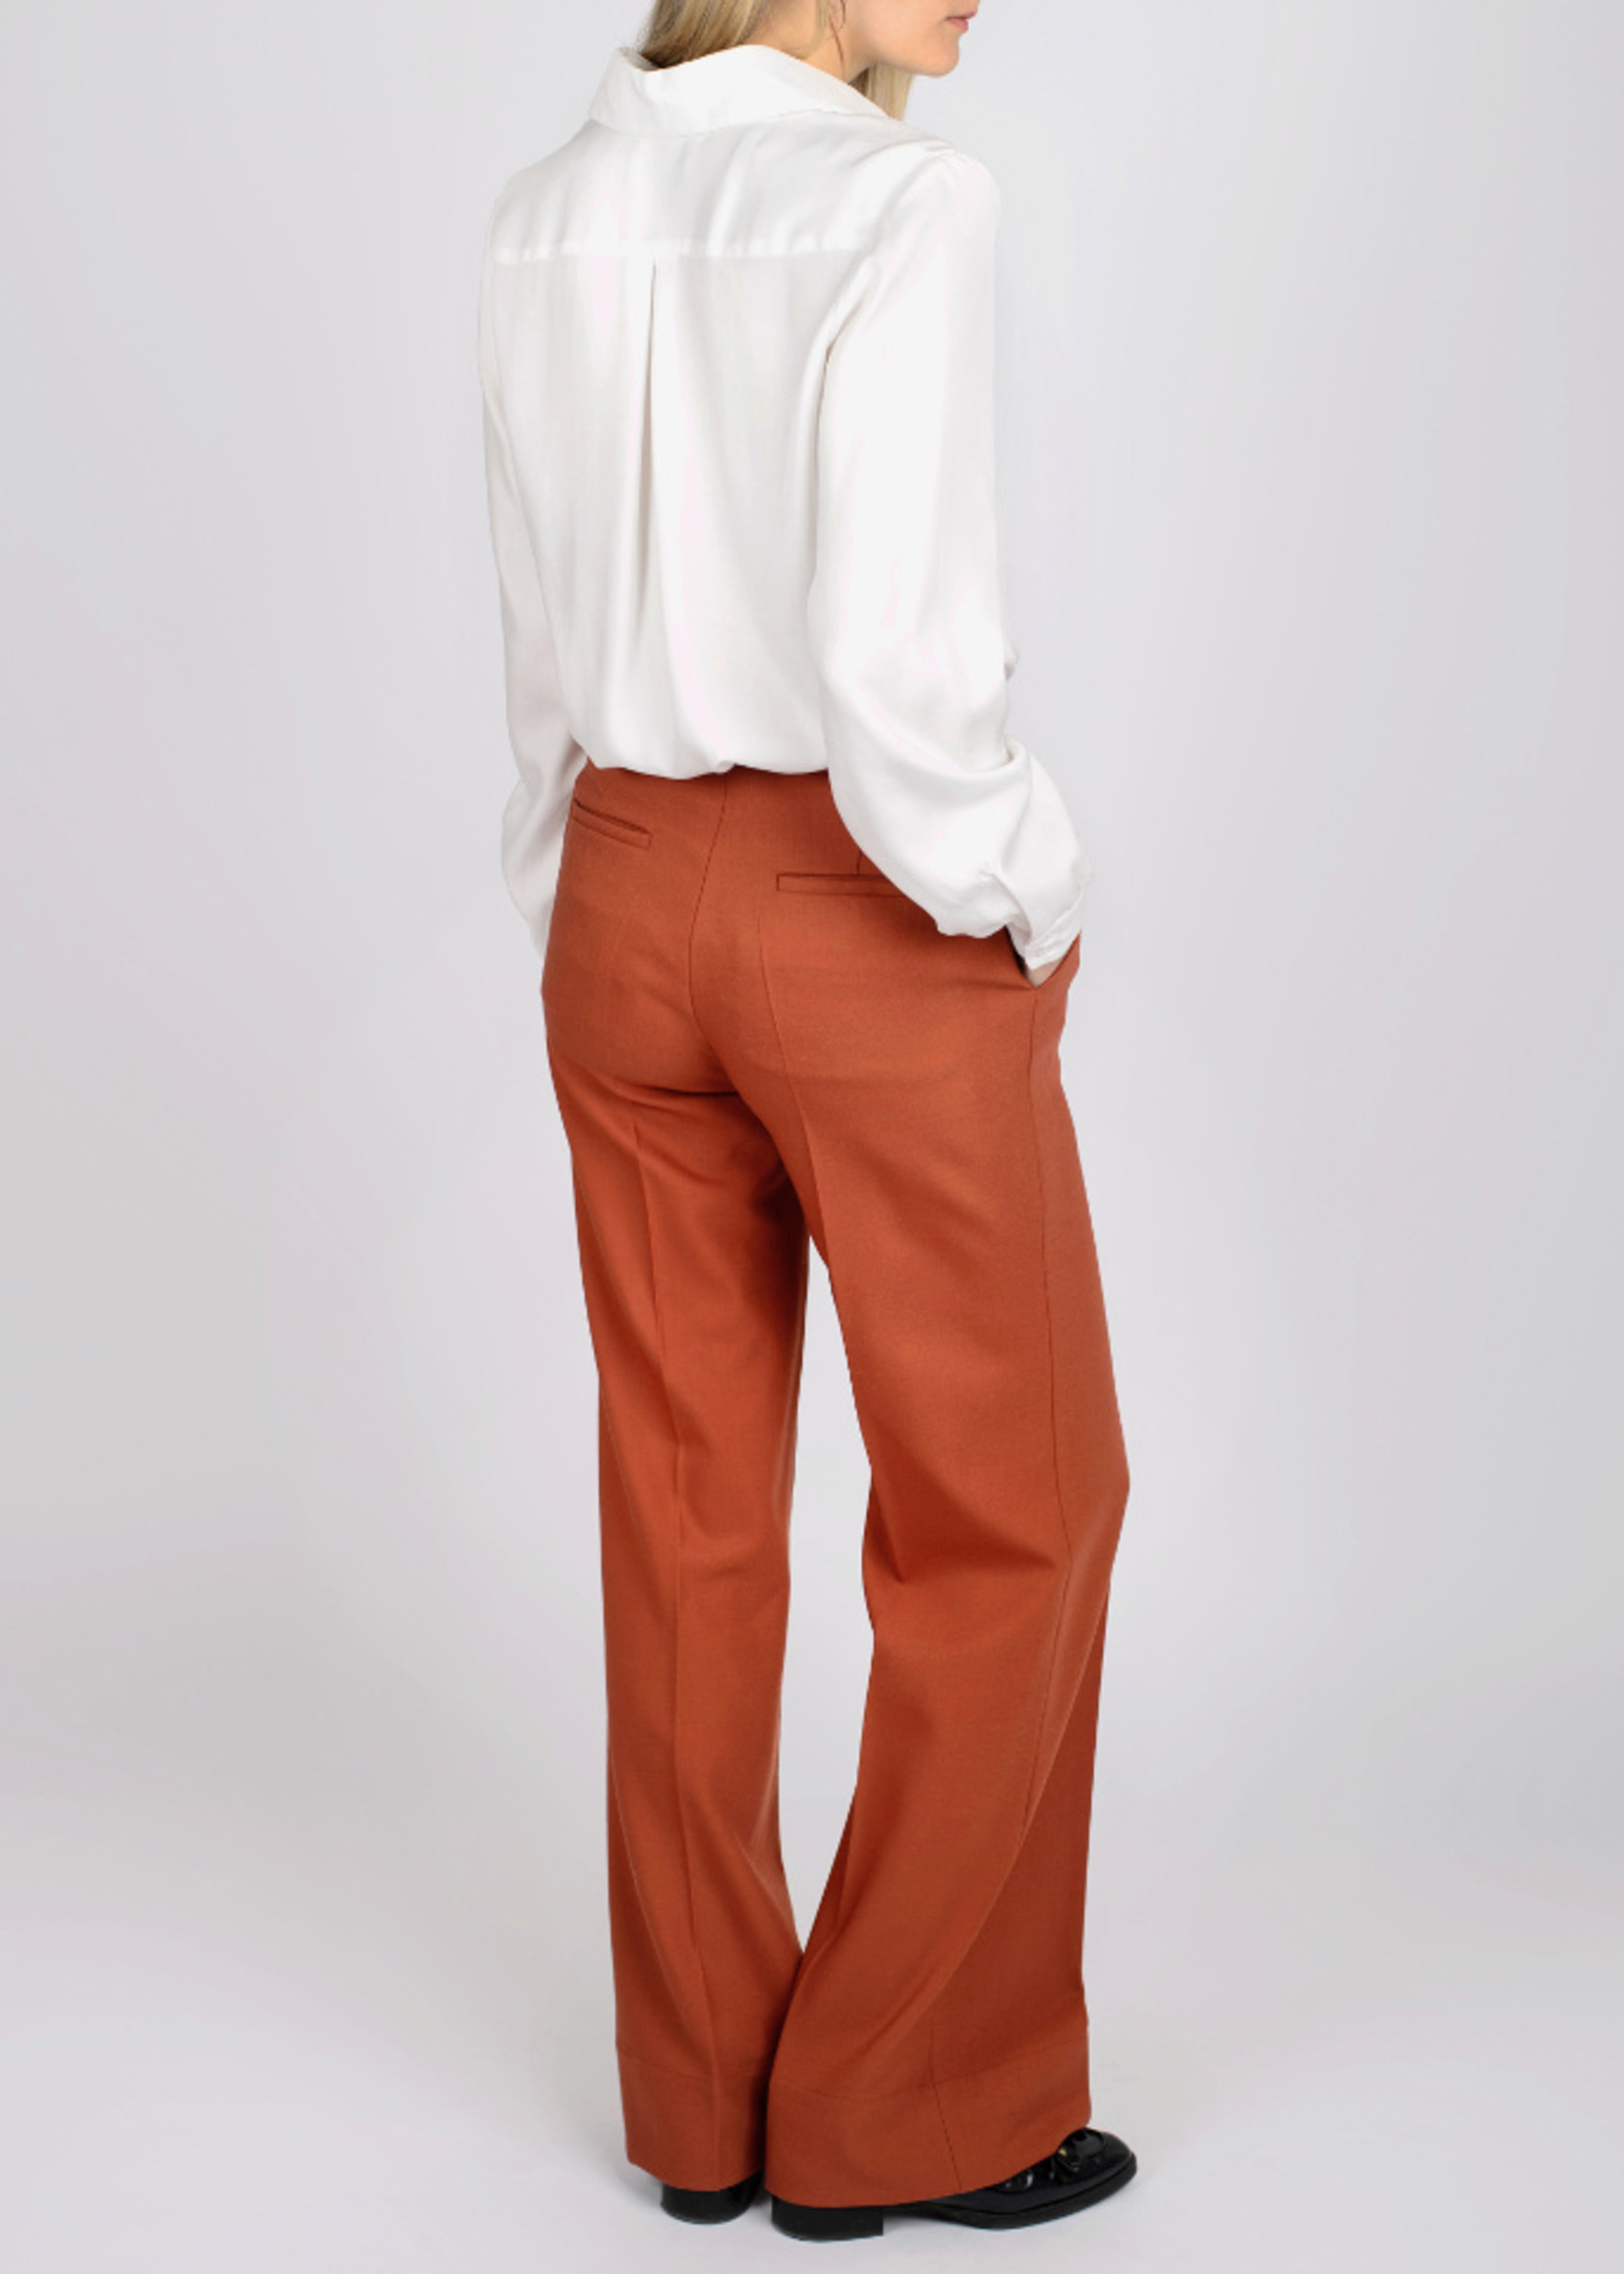 Pants WANDA | Rusty orange